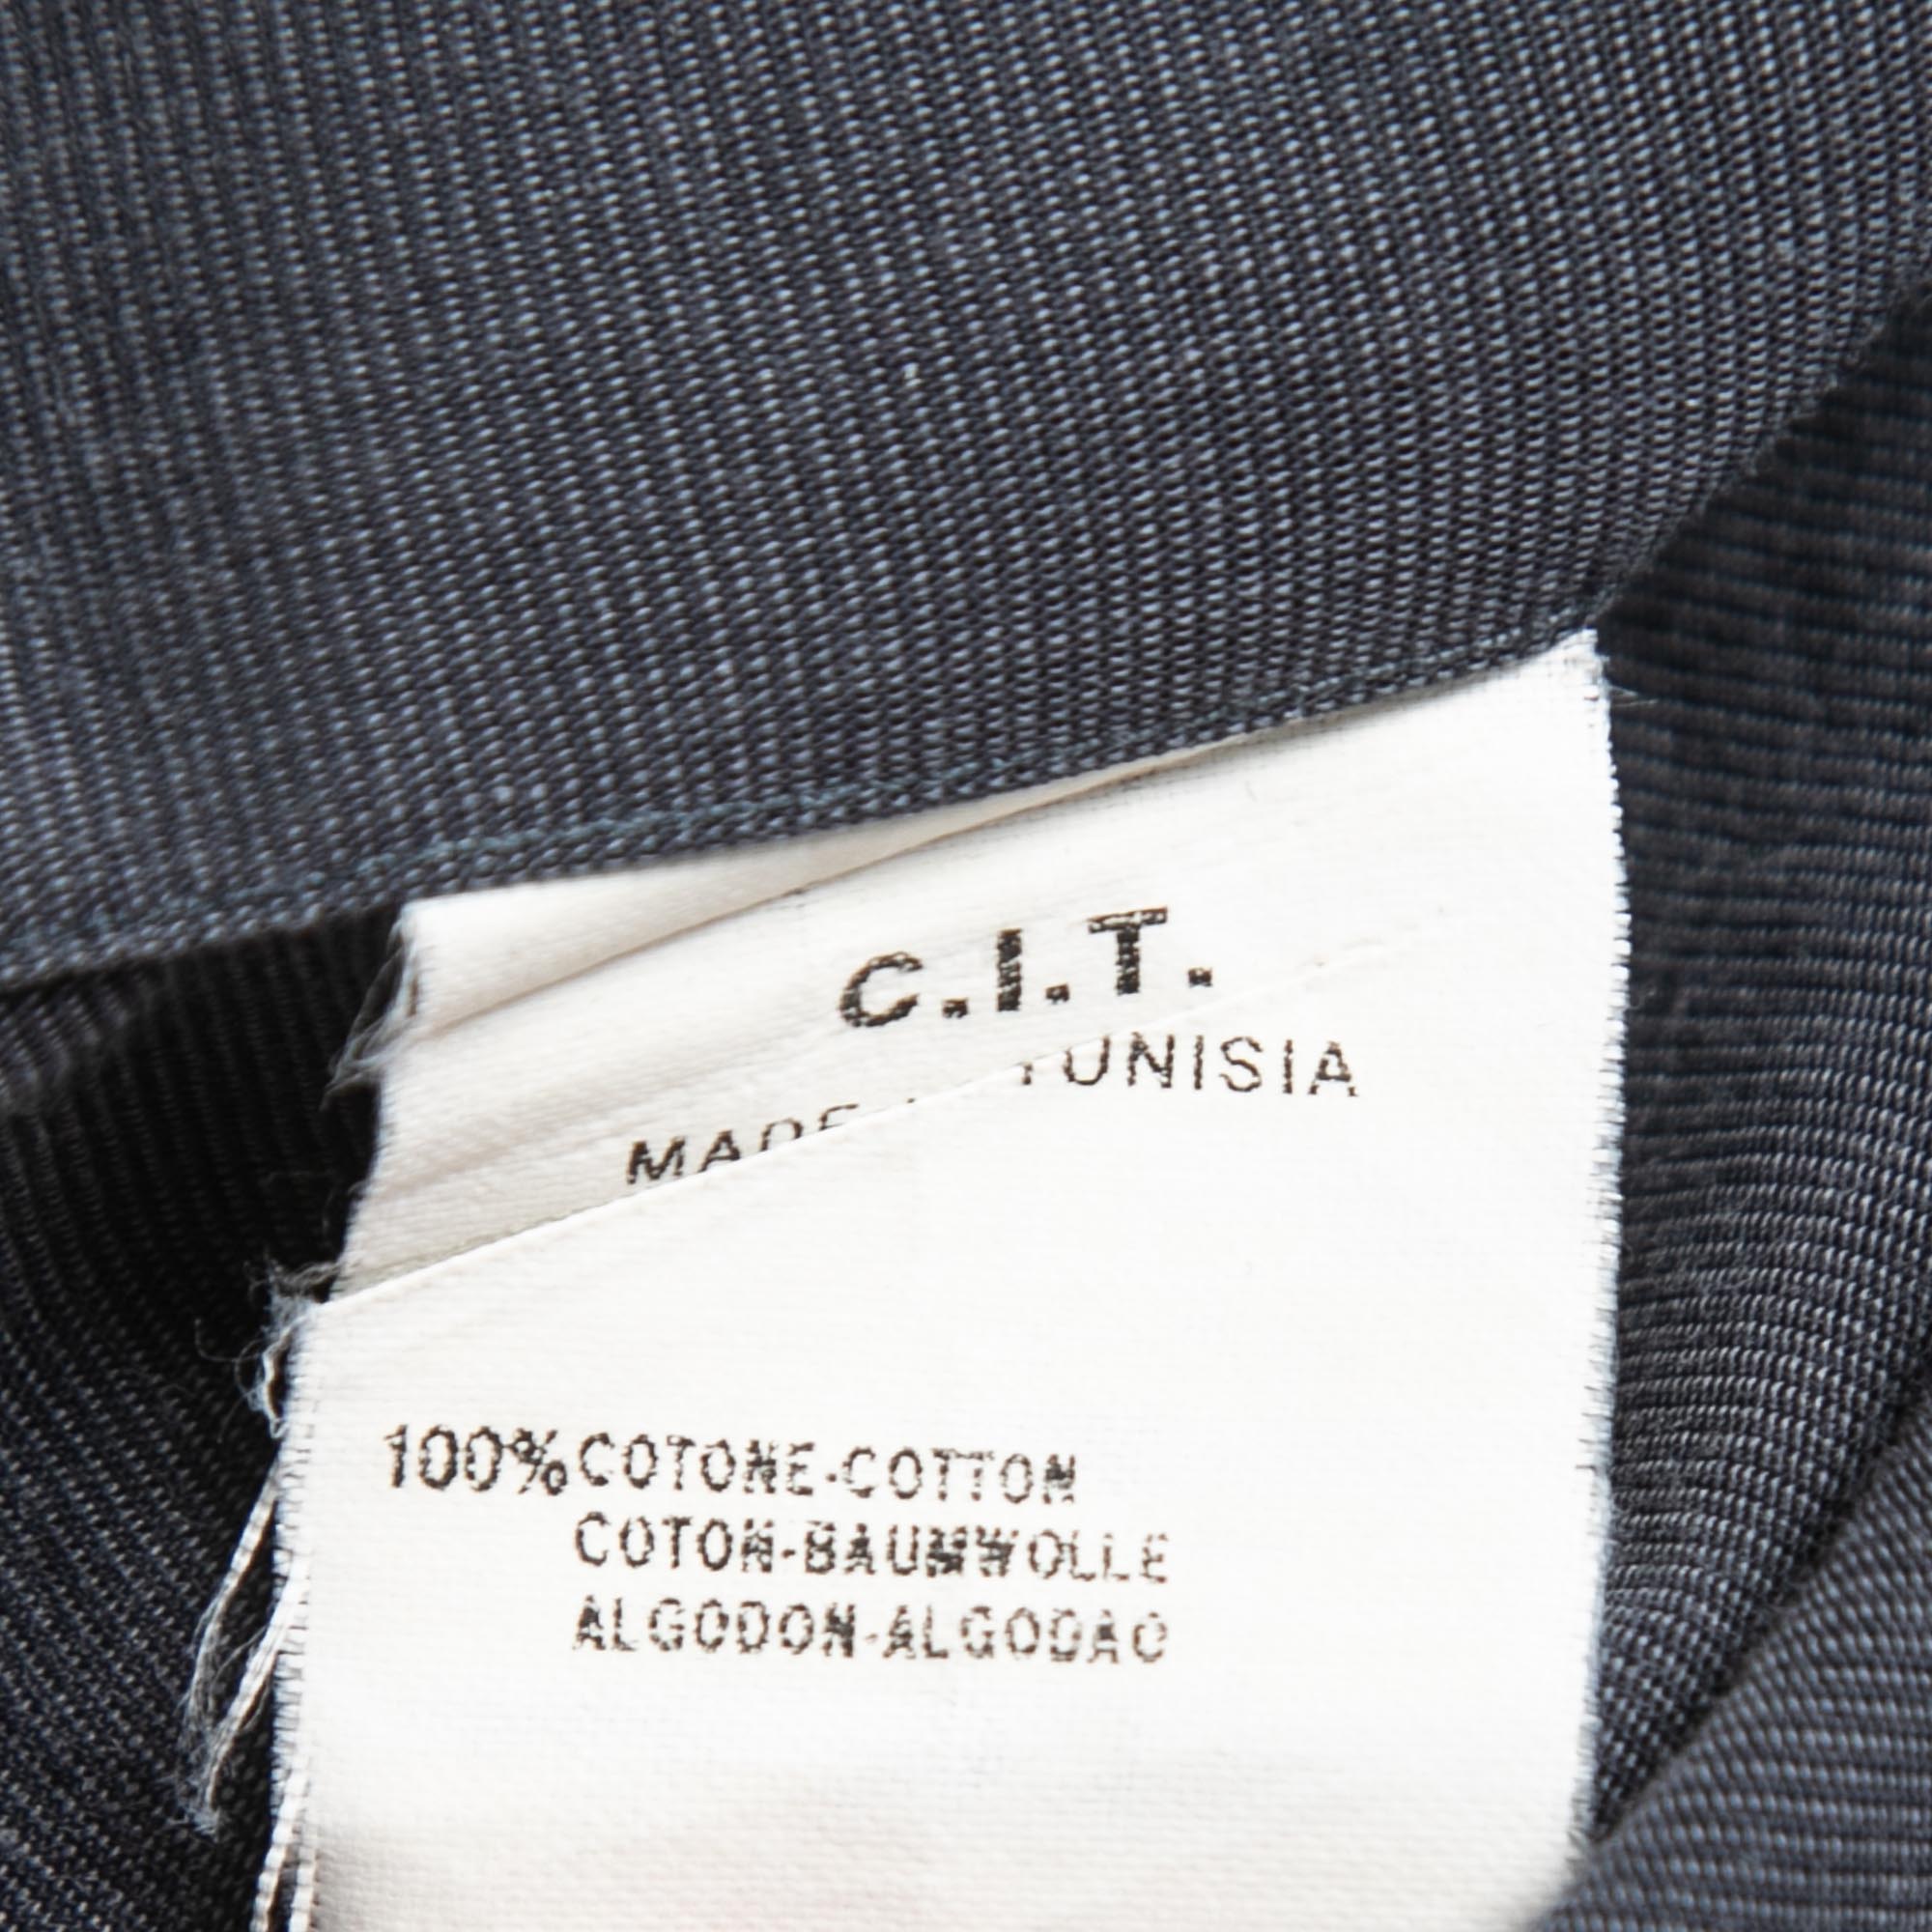 Armani Collezioni Grey Cotton Button Front Full Sleeve Shirt L